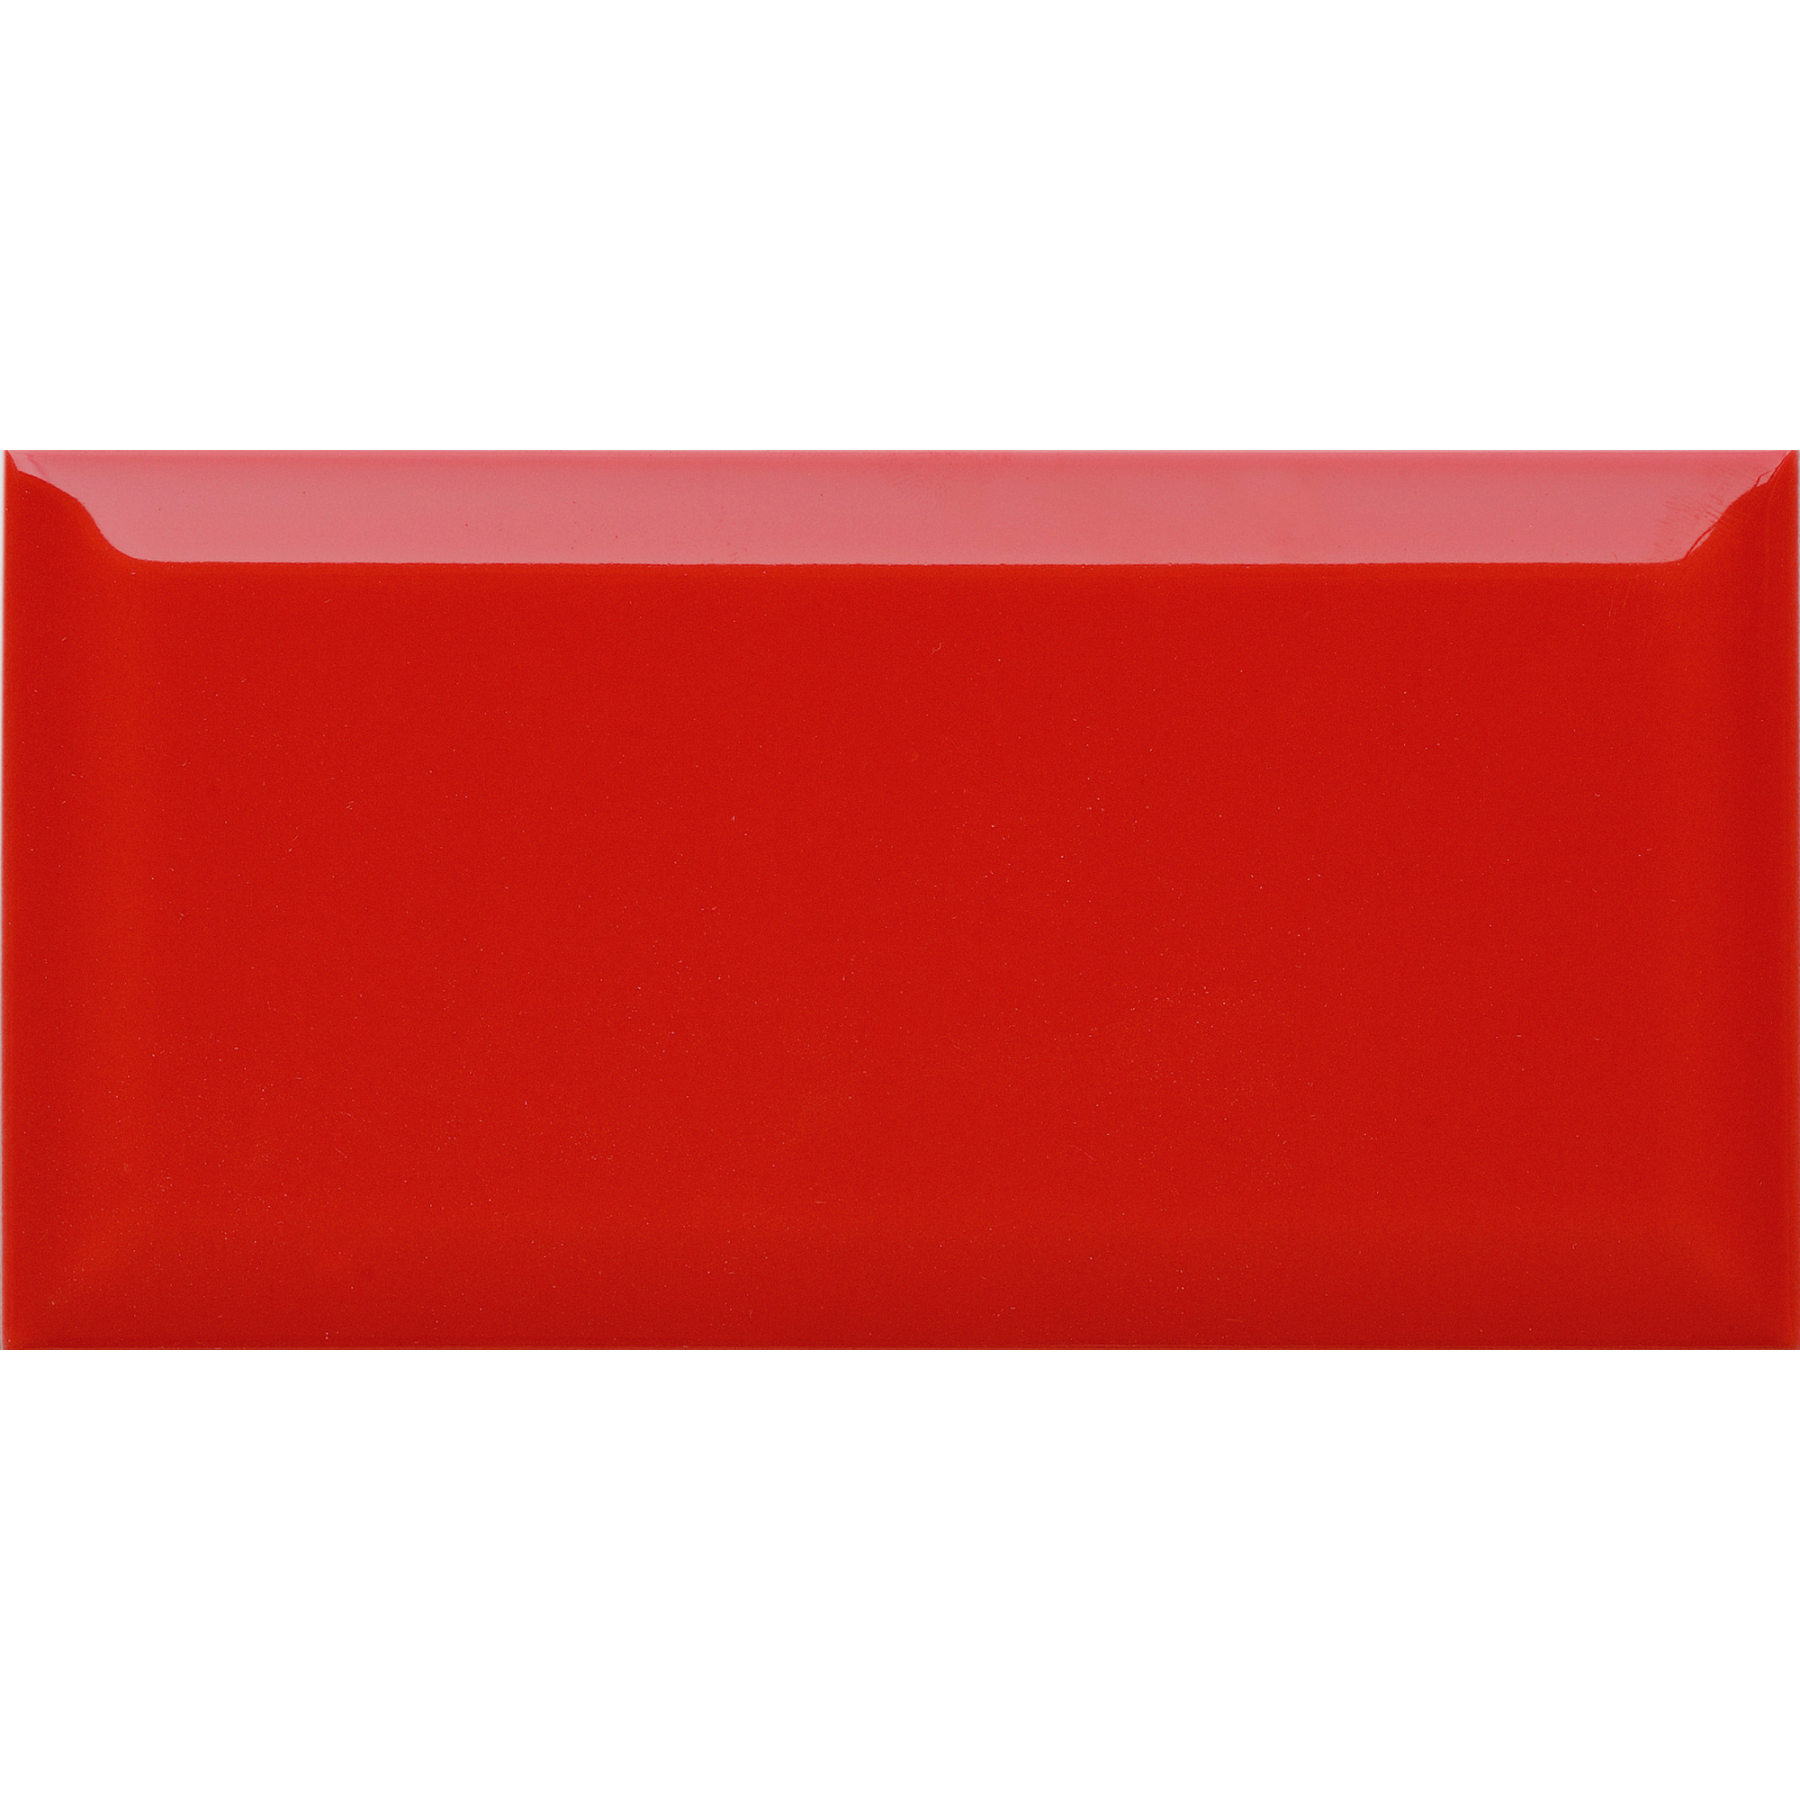 Metro Pillarbox Red Ceramic Gloss 10x20cm